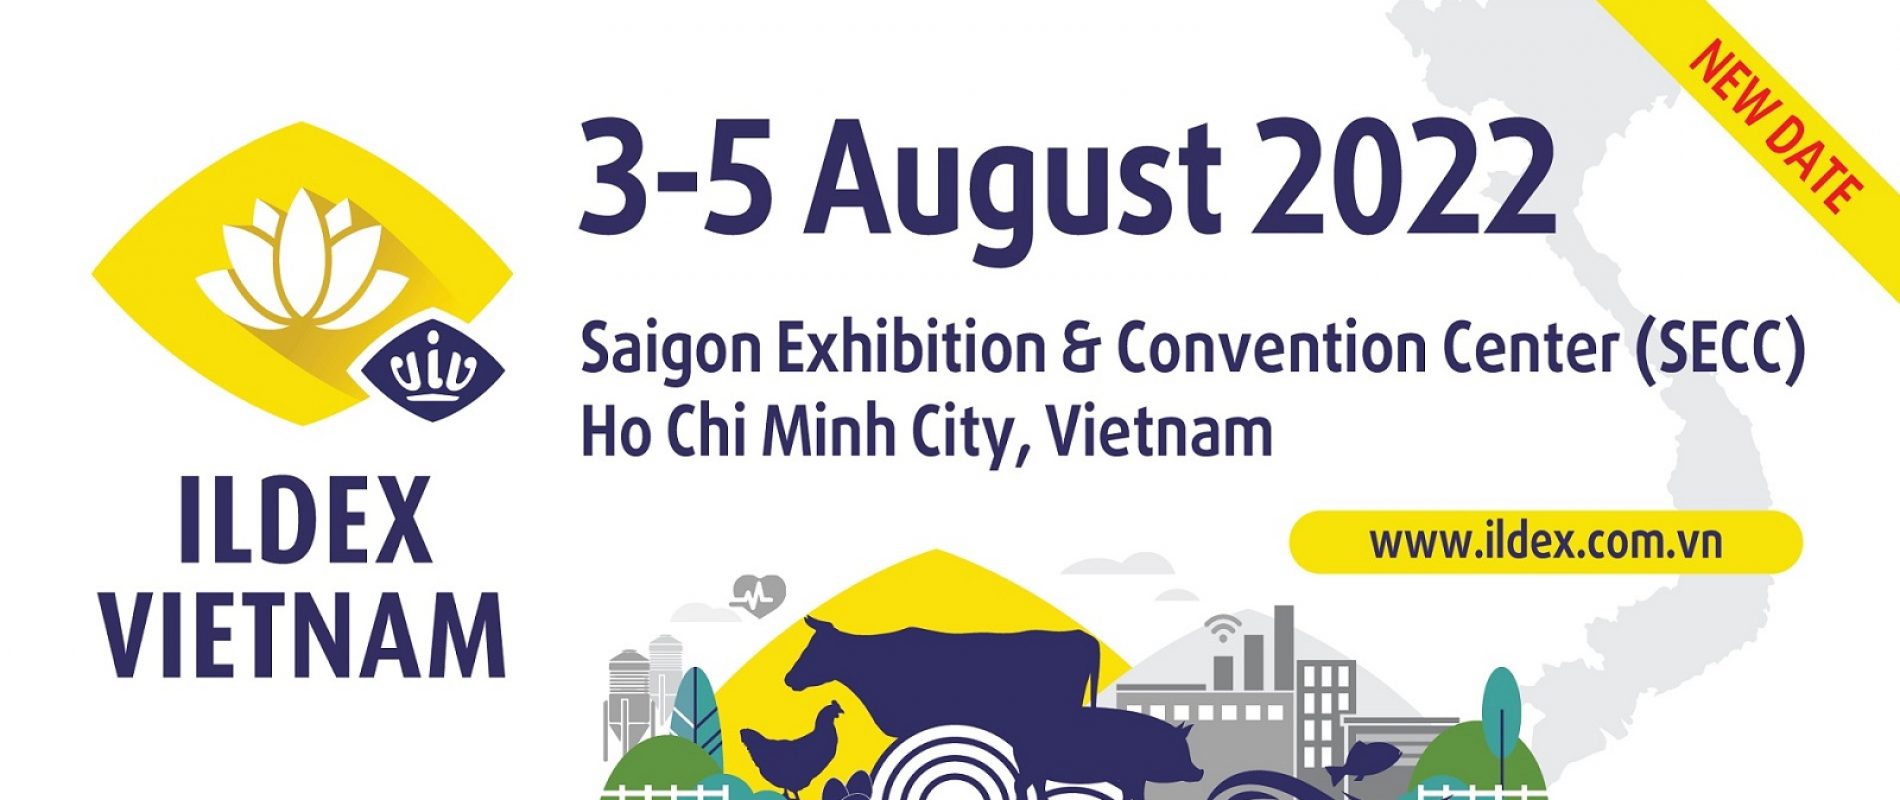 ILDEX VIETNAM 2022 - The 8th International Livestock, Dairy, Meat Processing and Aquaculture Exposition, Vietnam 0